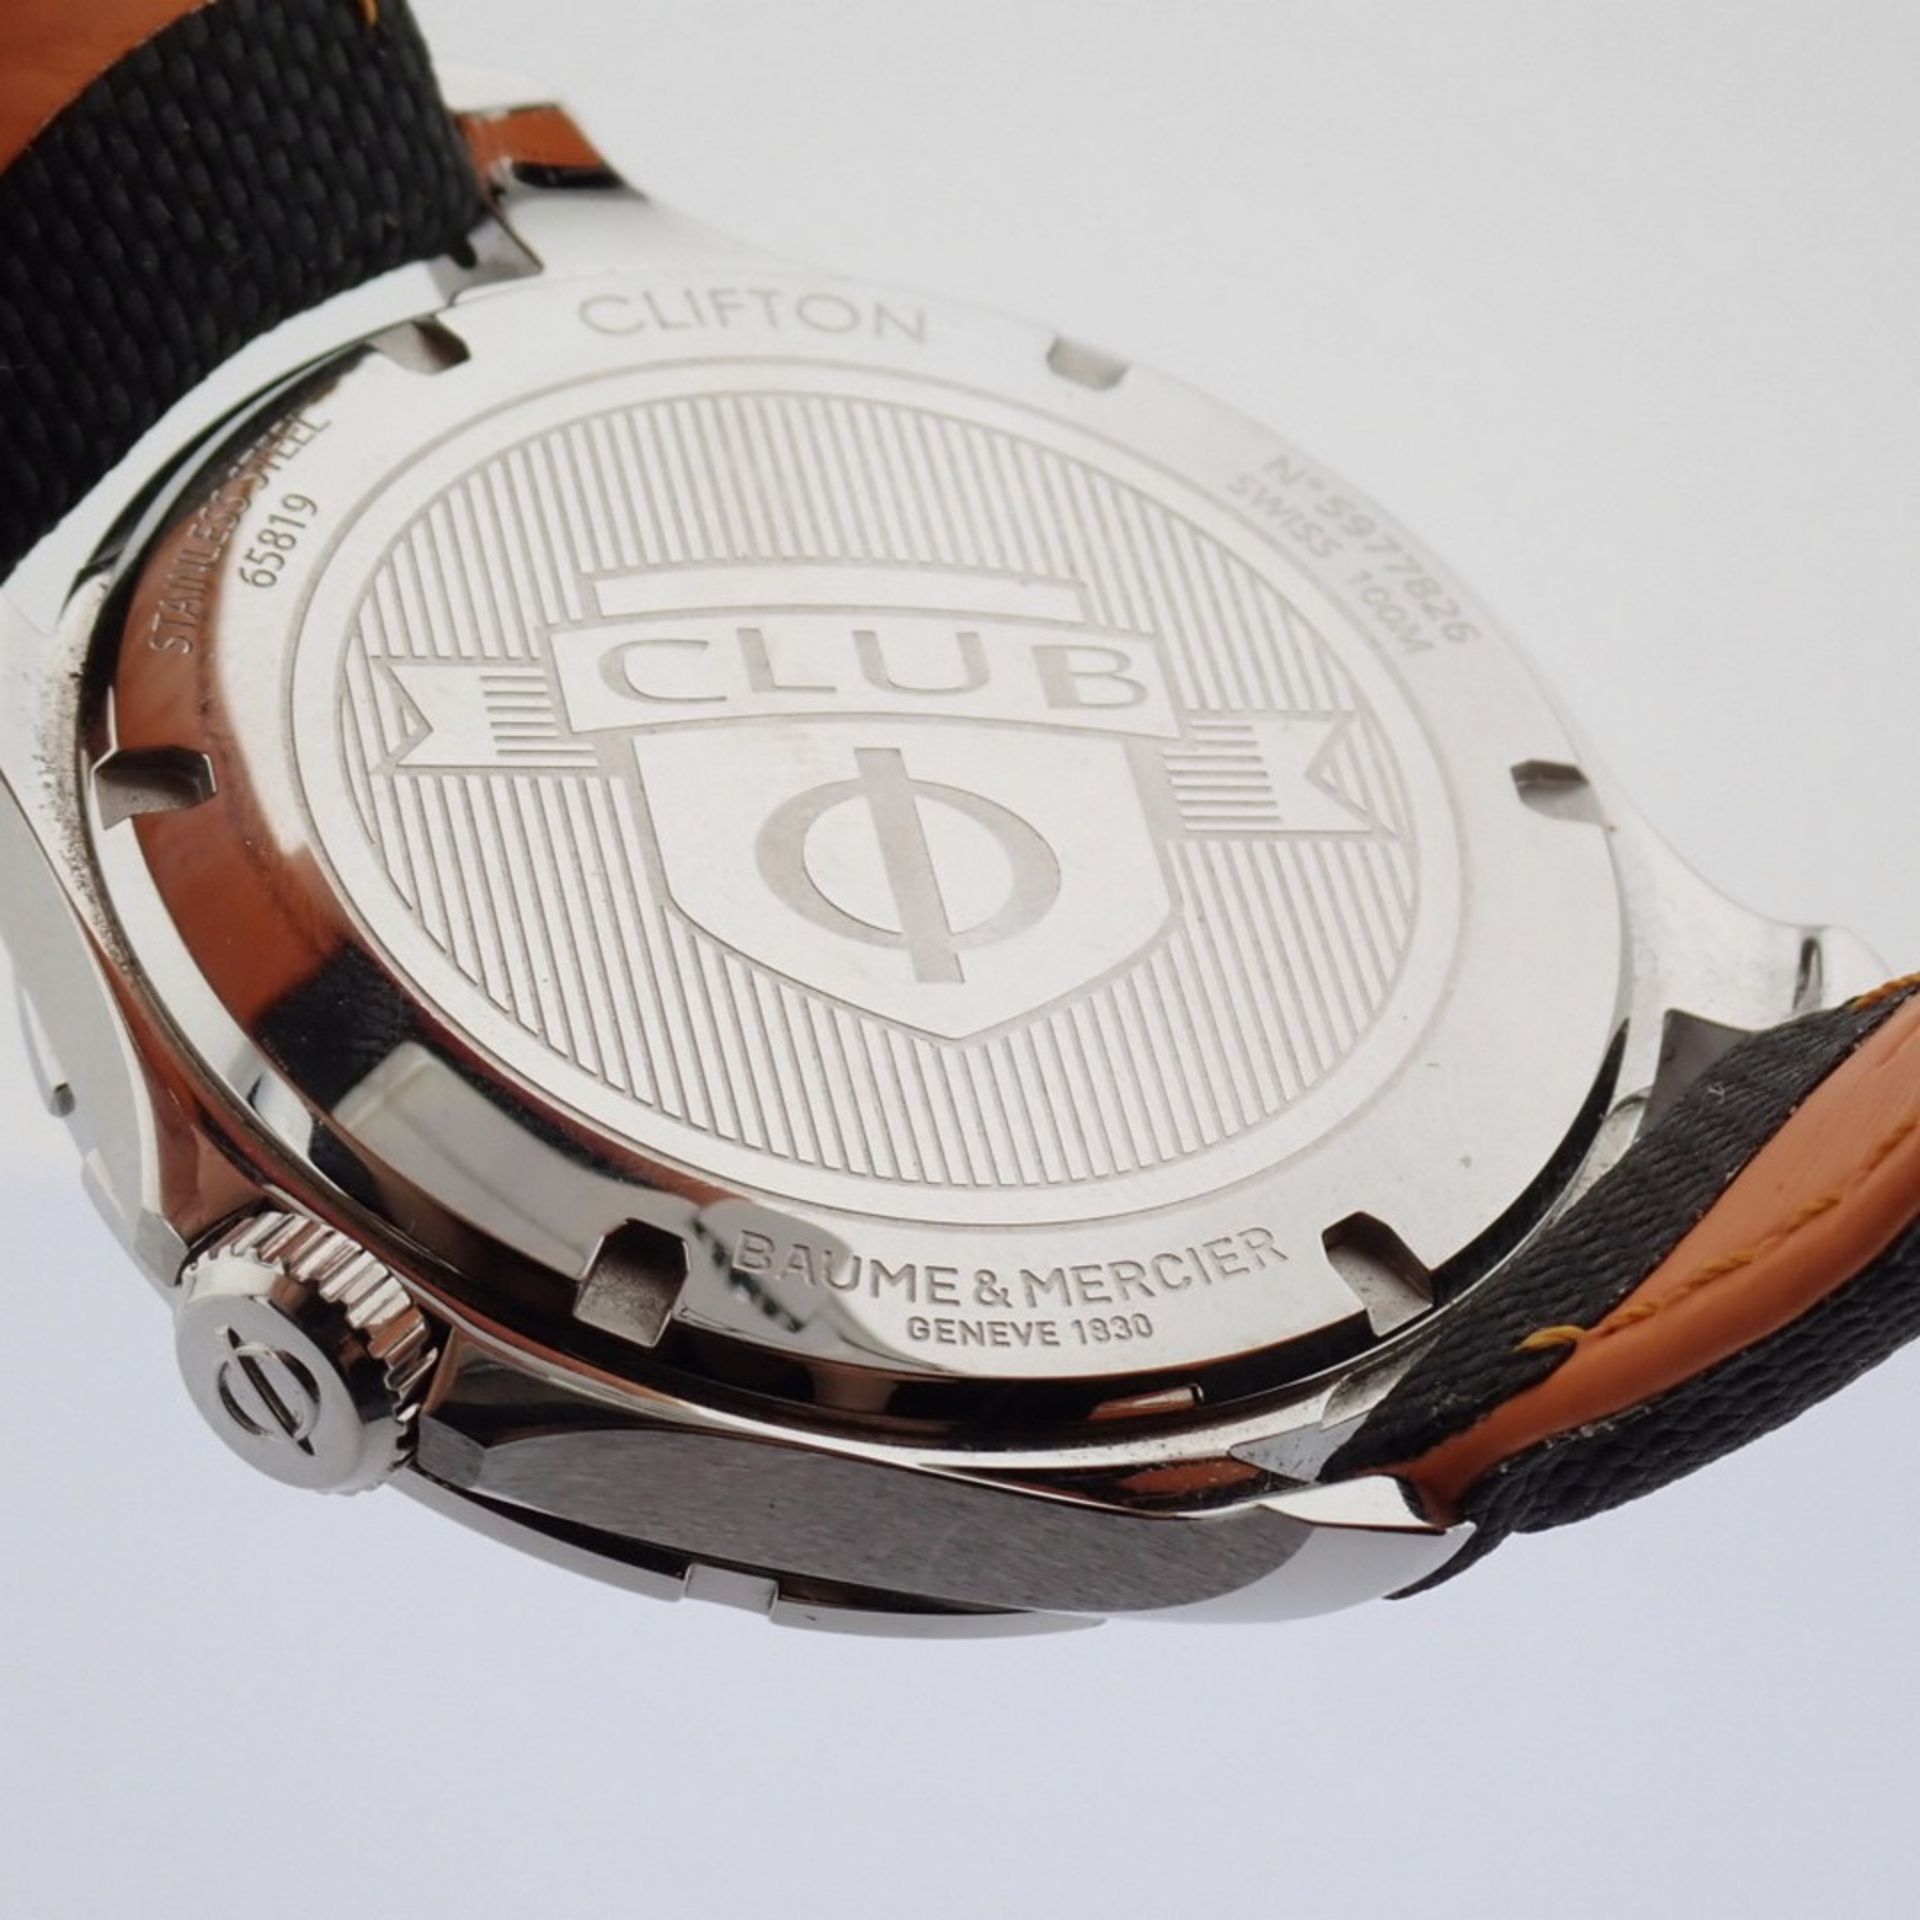 Baume & Mercier / Clifton Club - Gentlemen's Steel Wrist Watch - Image 13 of 15